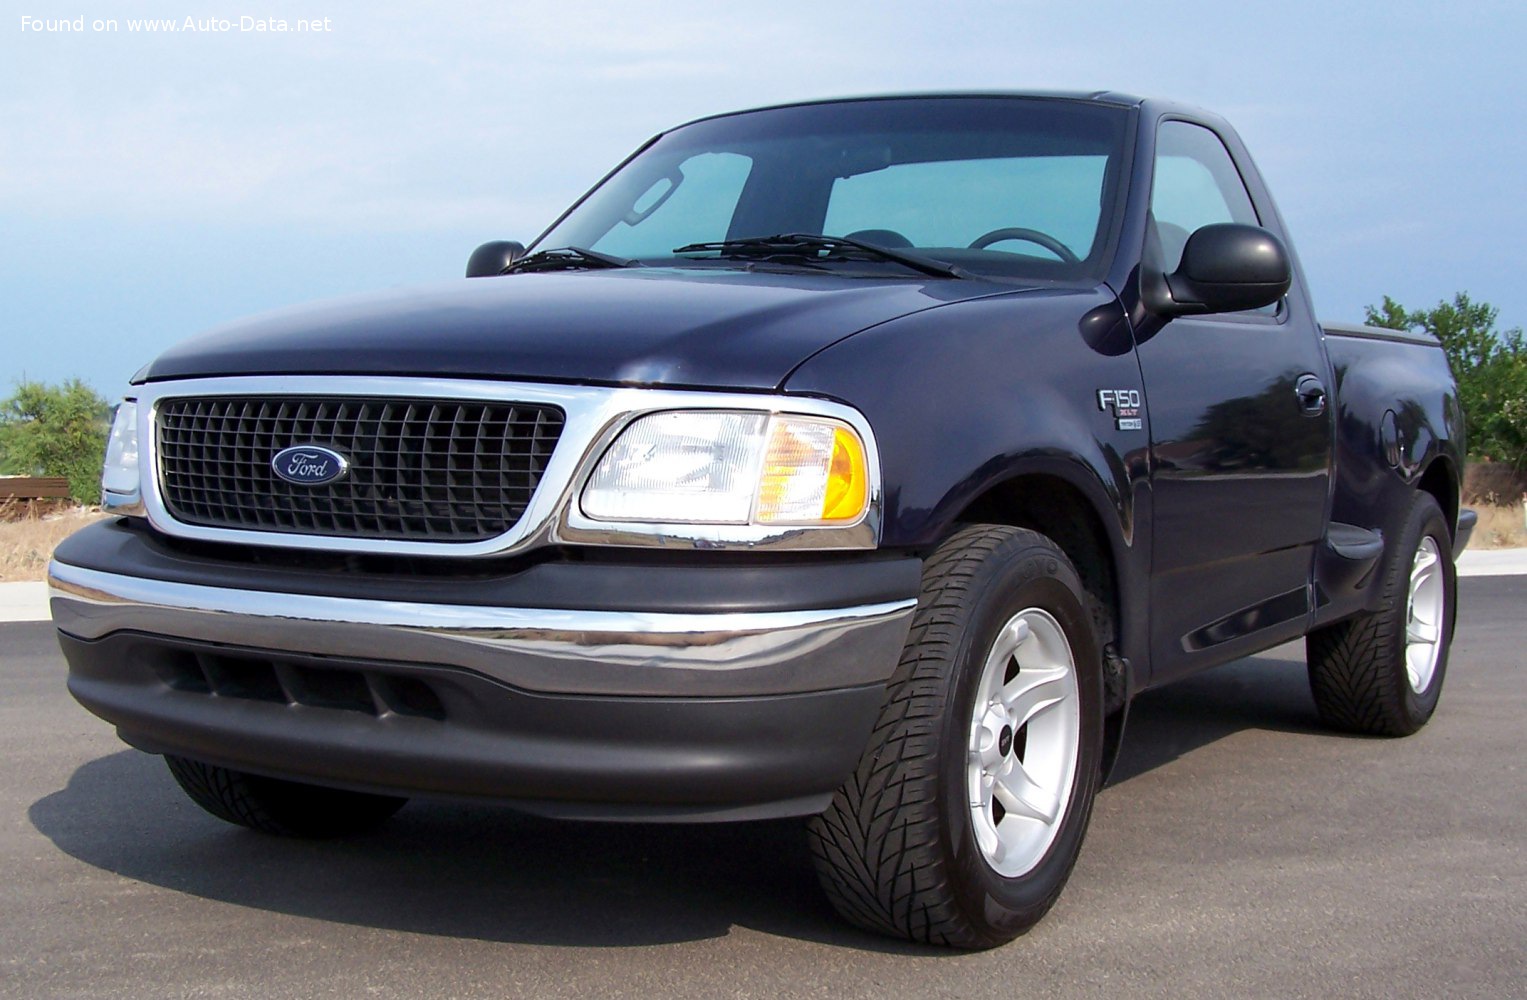 1999 Ford F-Series F-150 X Regular Cab  V8 Triton (260 Hp) Automatic |  Technical specs, data, fuel consumption, Dimensions